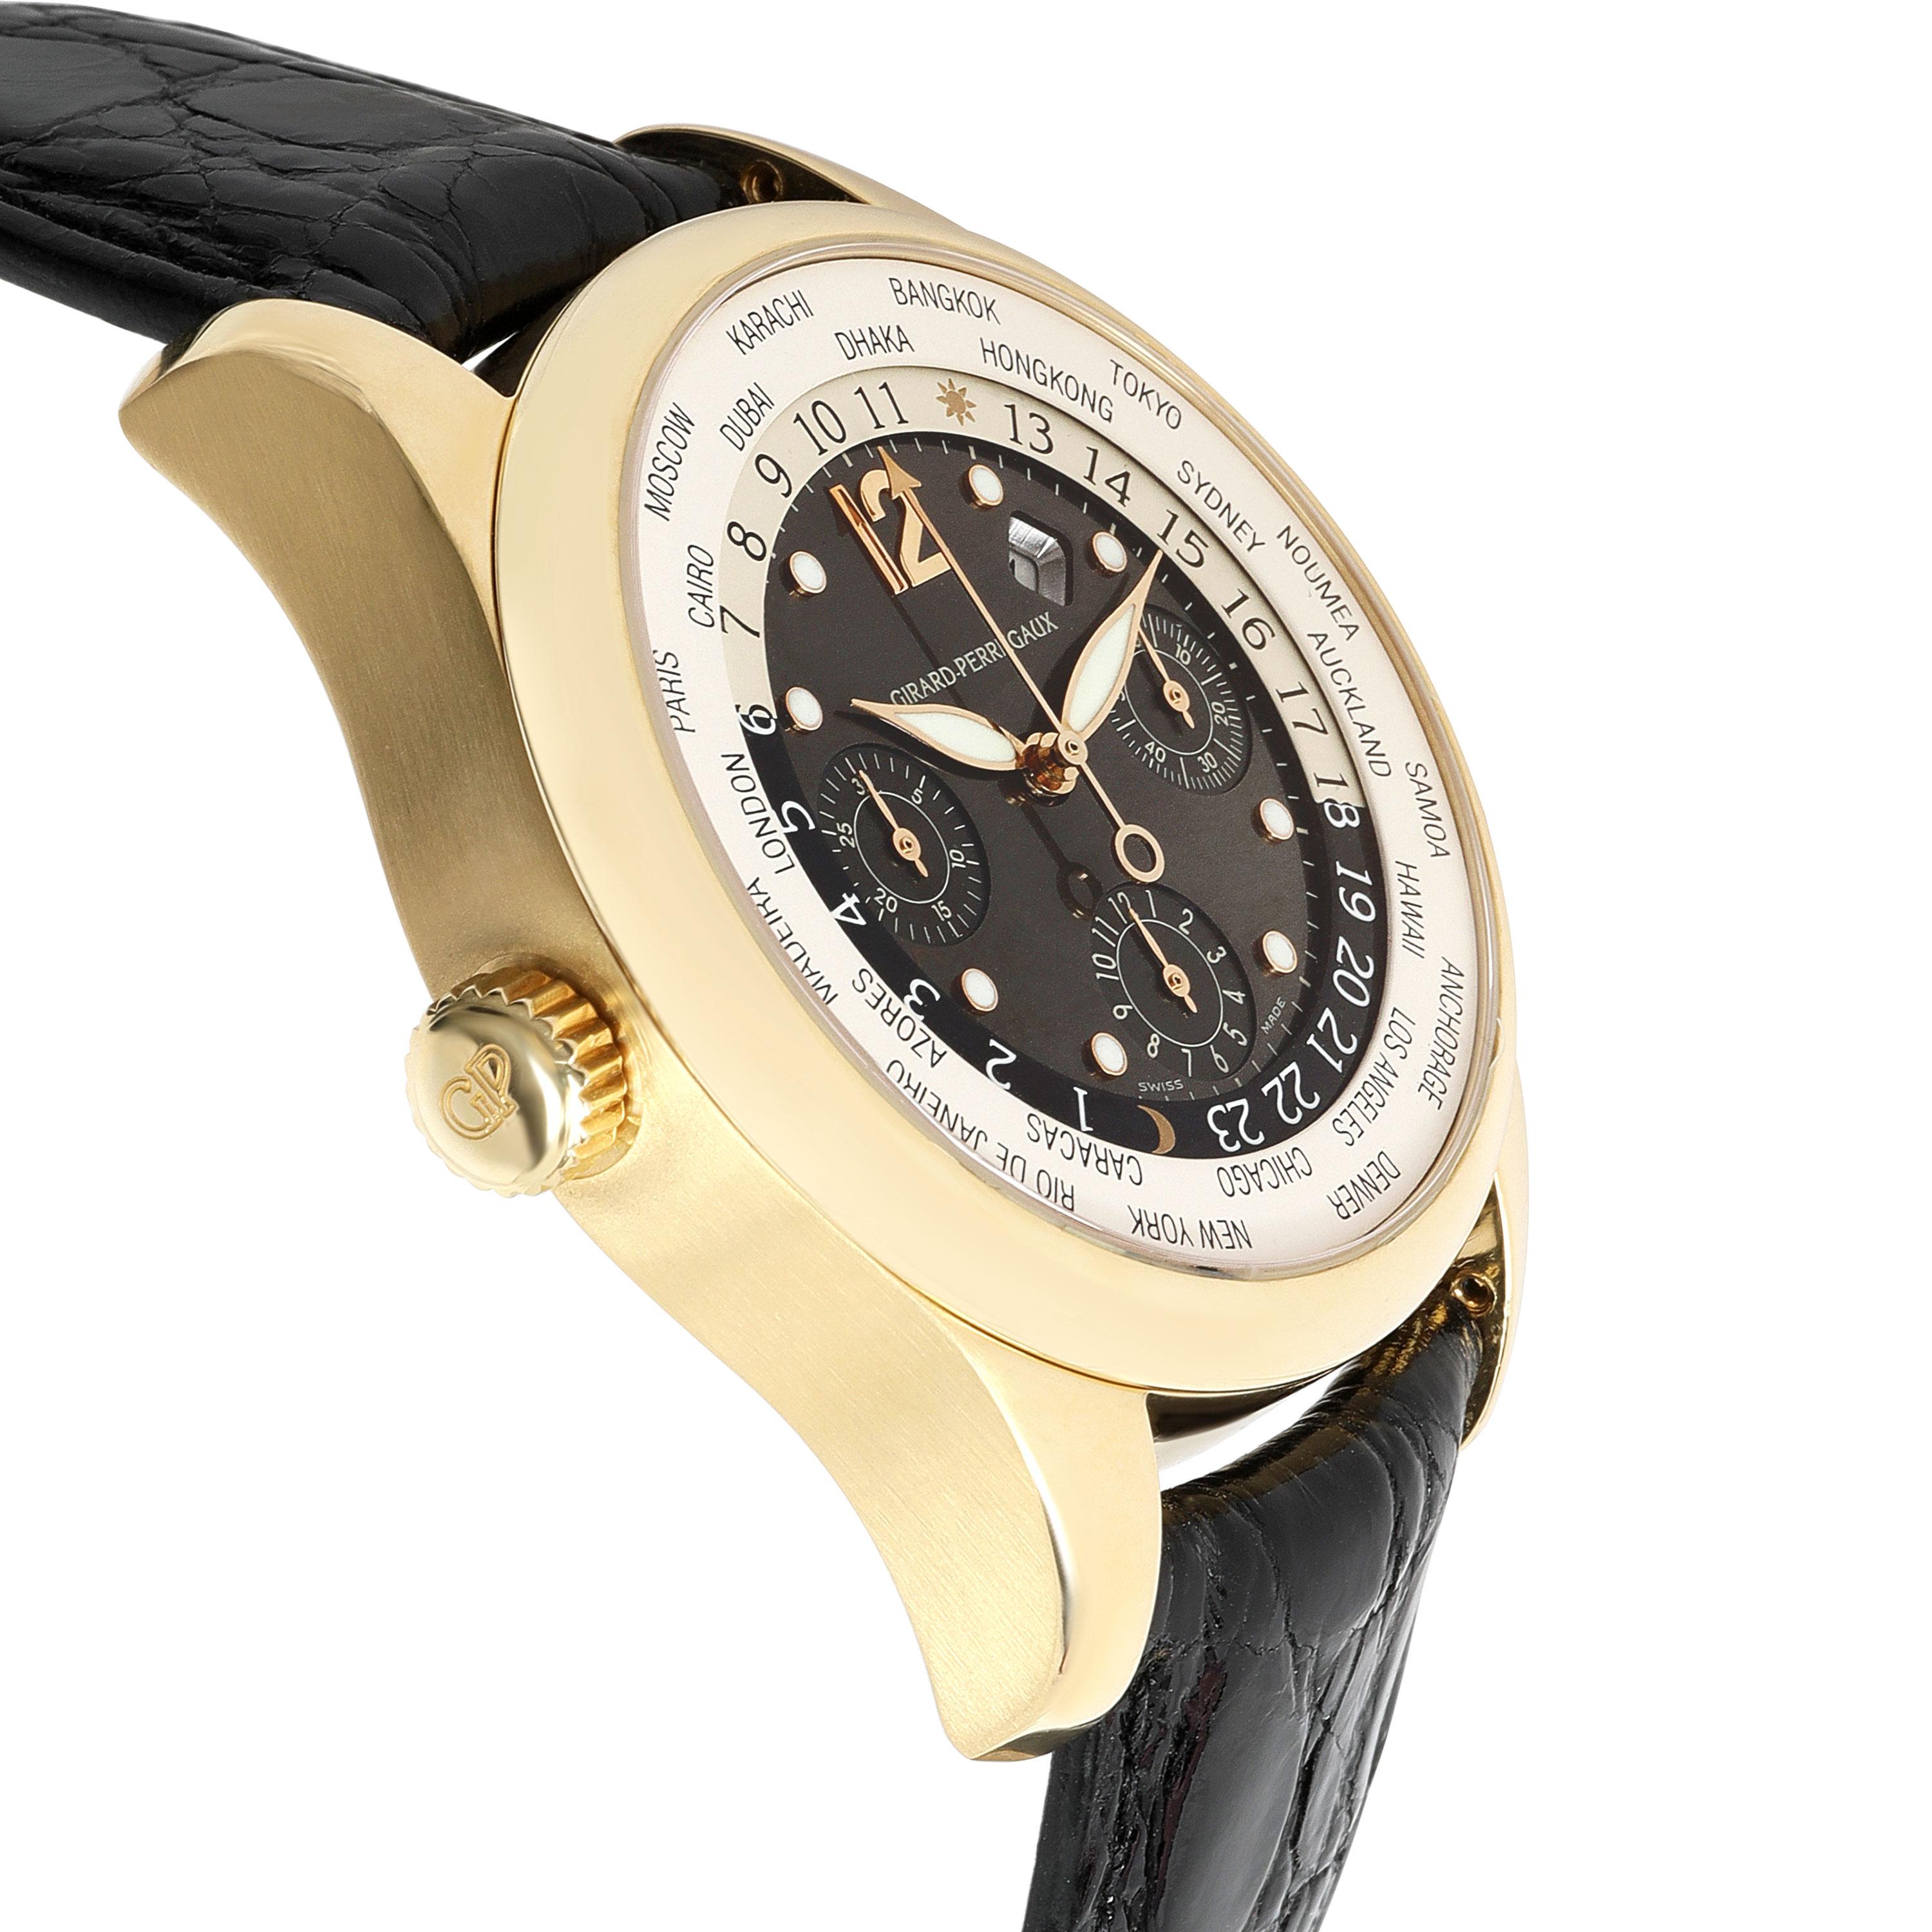 Girard Perregaux WW.TC Traveller 4980 Men's Watch in 18kt Yellow Gold 1